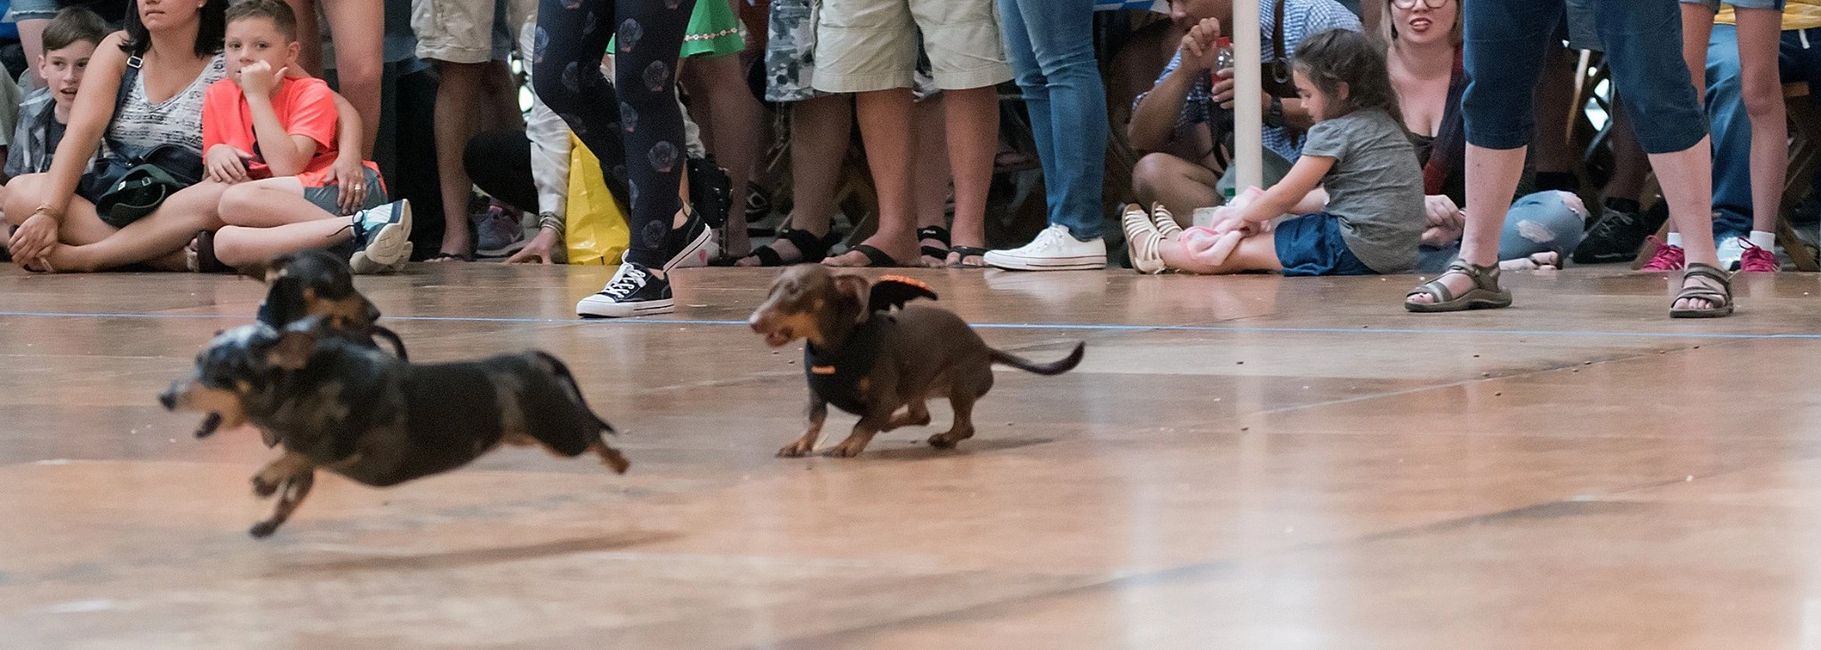 Wiener Dog Races Frankenmuth Festivals